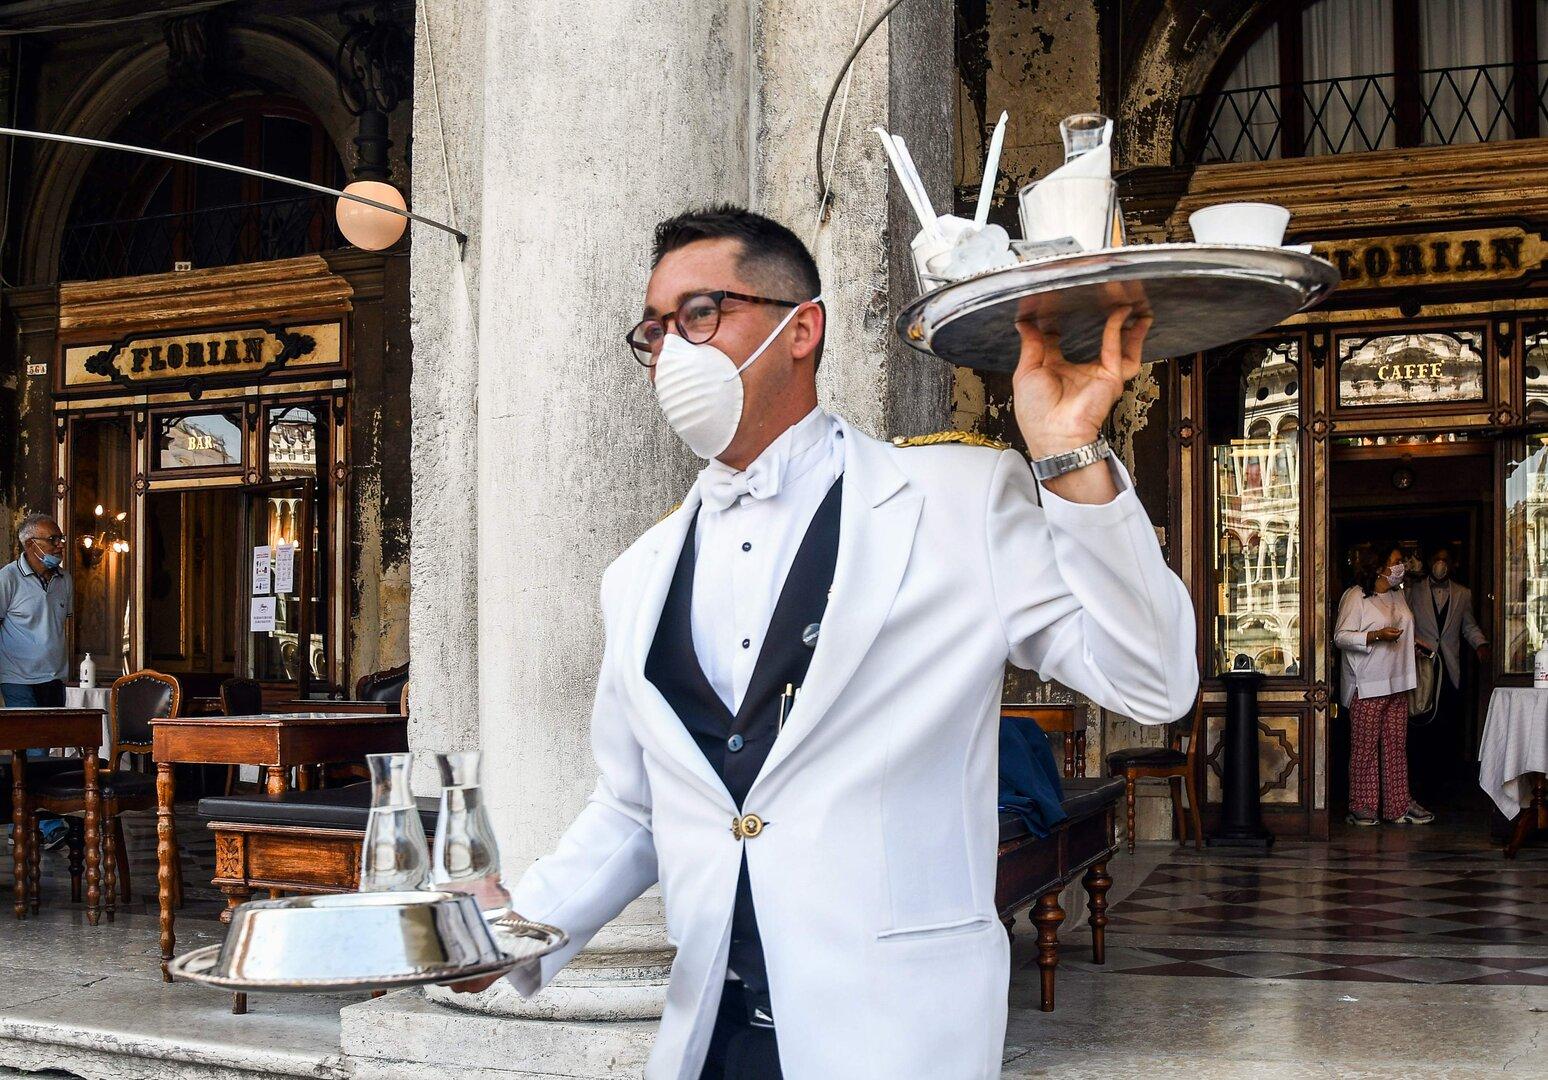 Sommerhitze in Venedig: Caffè Florian bietet Kellner leichte Uniformen